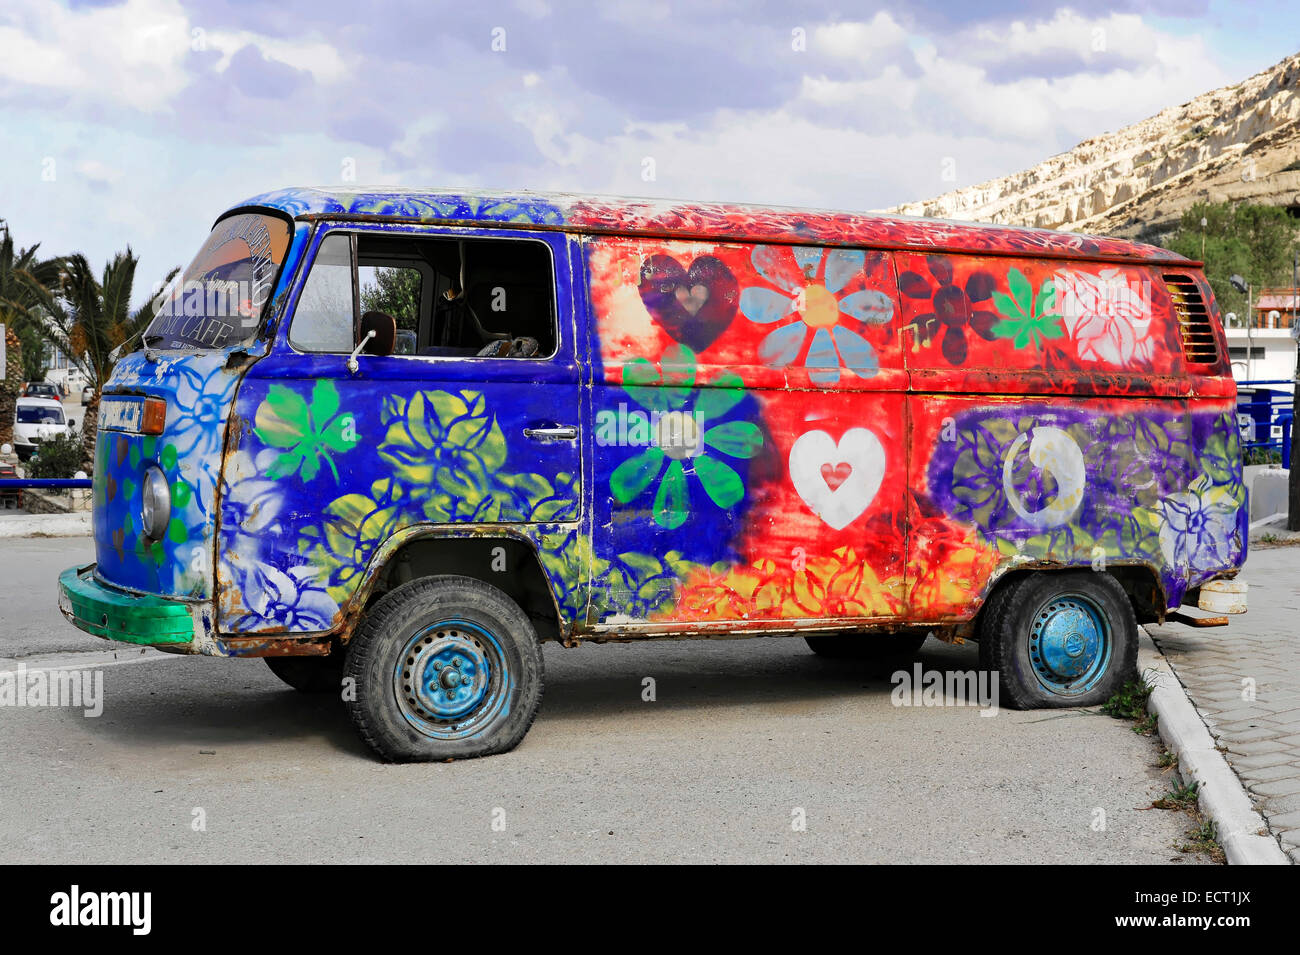 Alte bemalte VW Campingbus, Hippie van, Matala, Kreta, Griechenland  Stockfotografie - Alamy